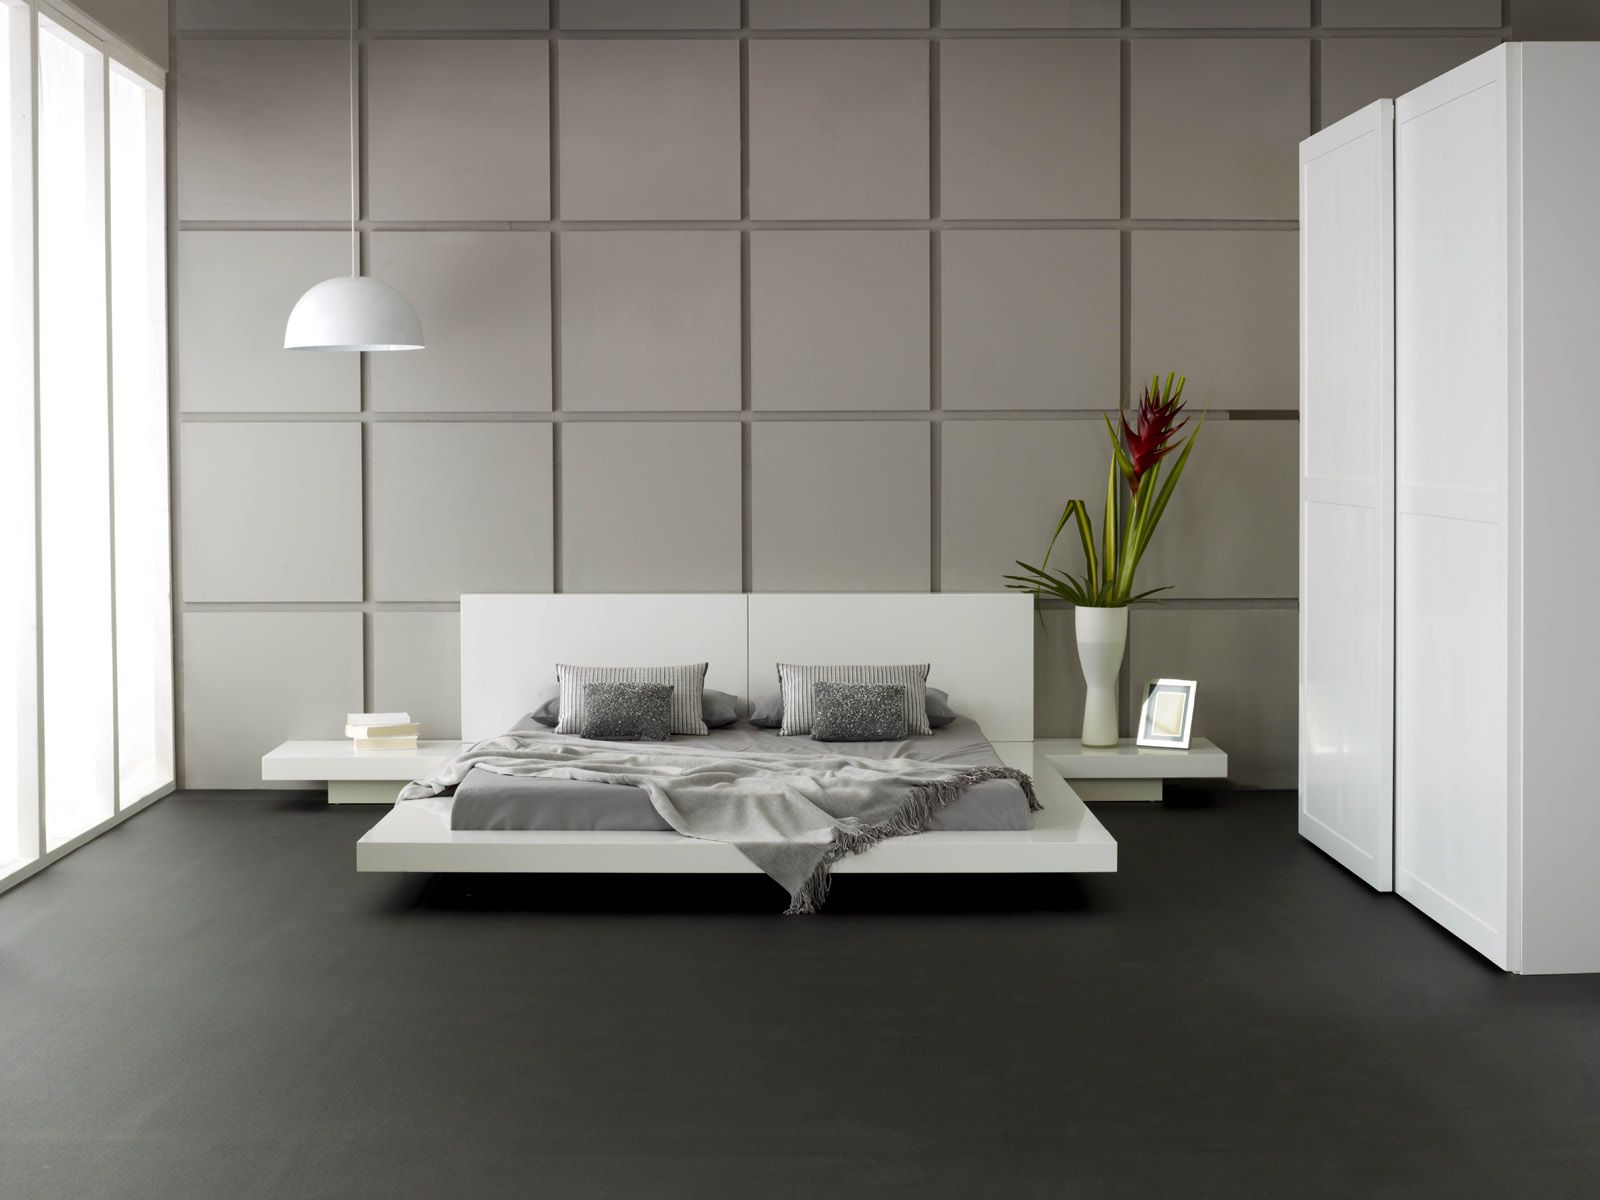 Minimalist Bedroom with Amazing Square Pattern